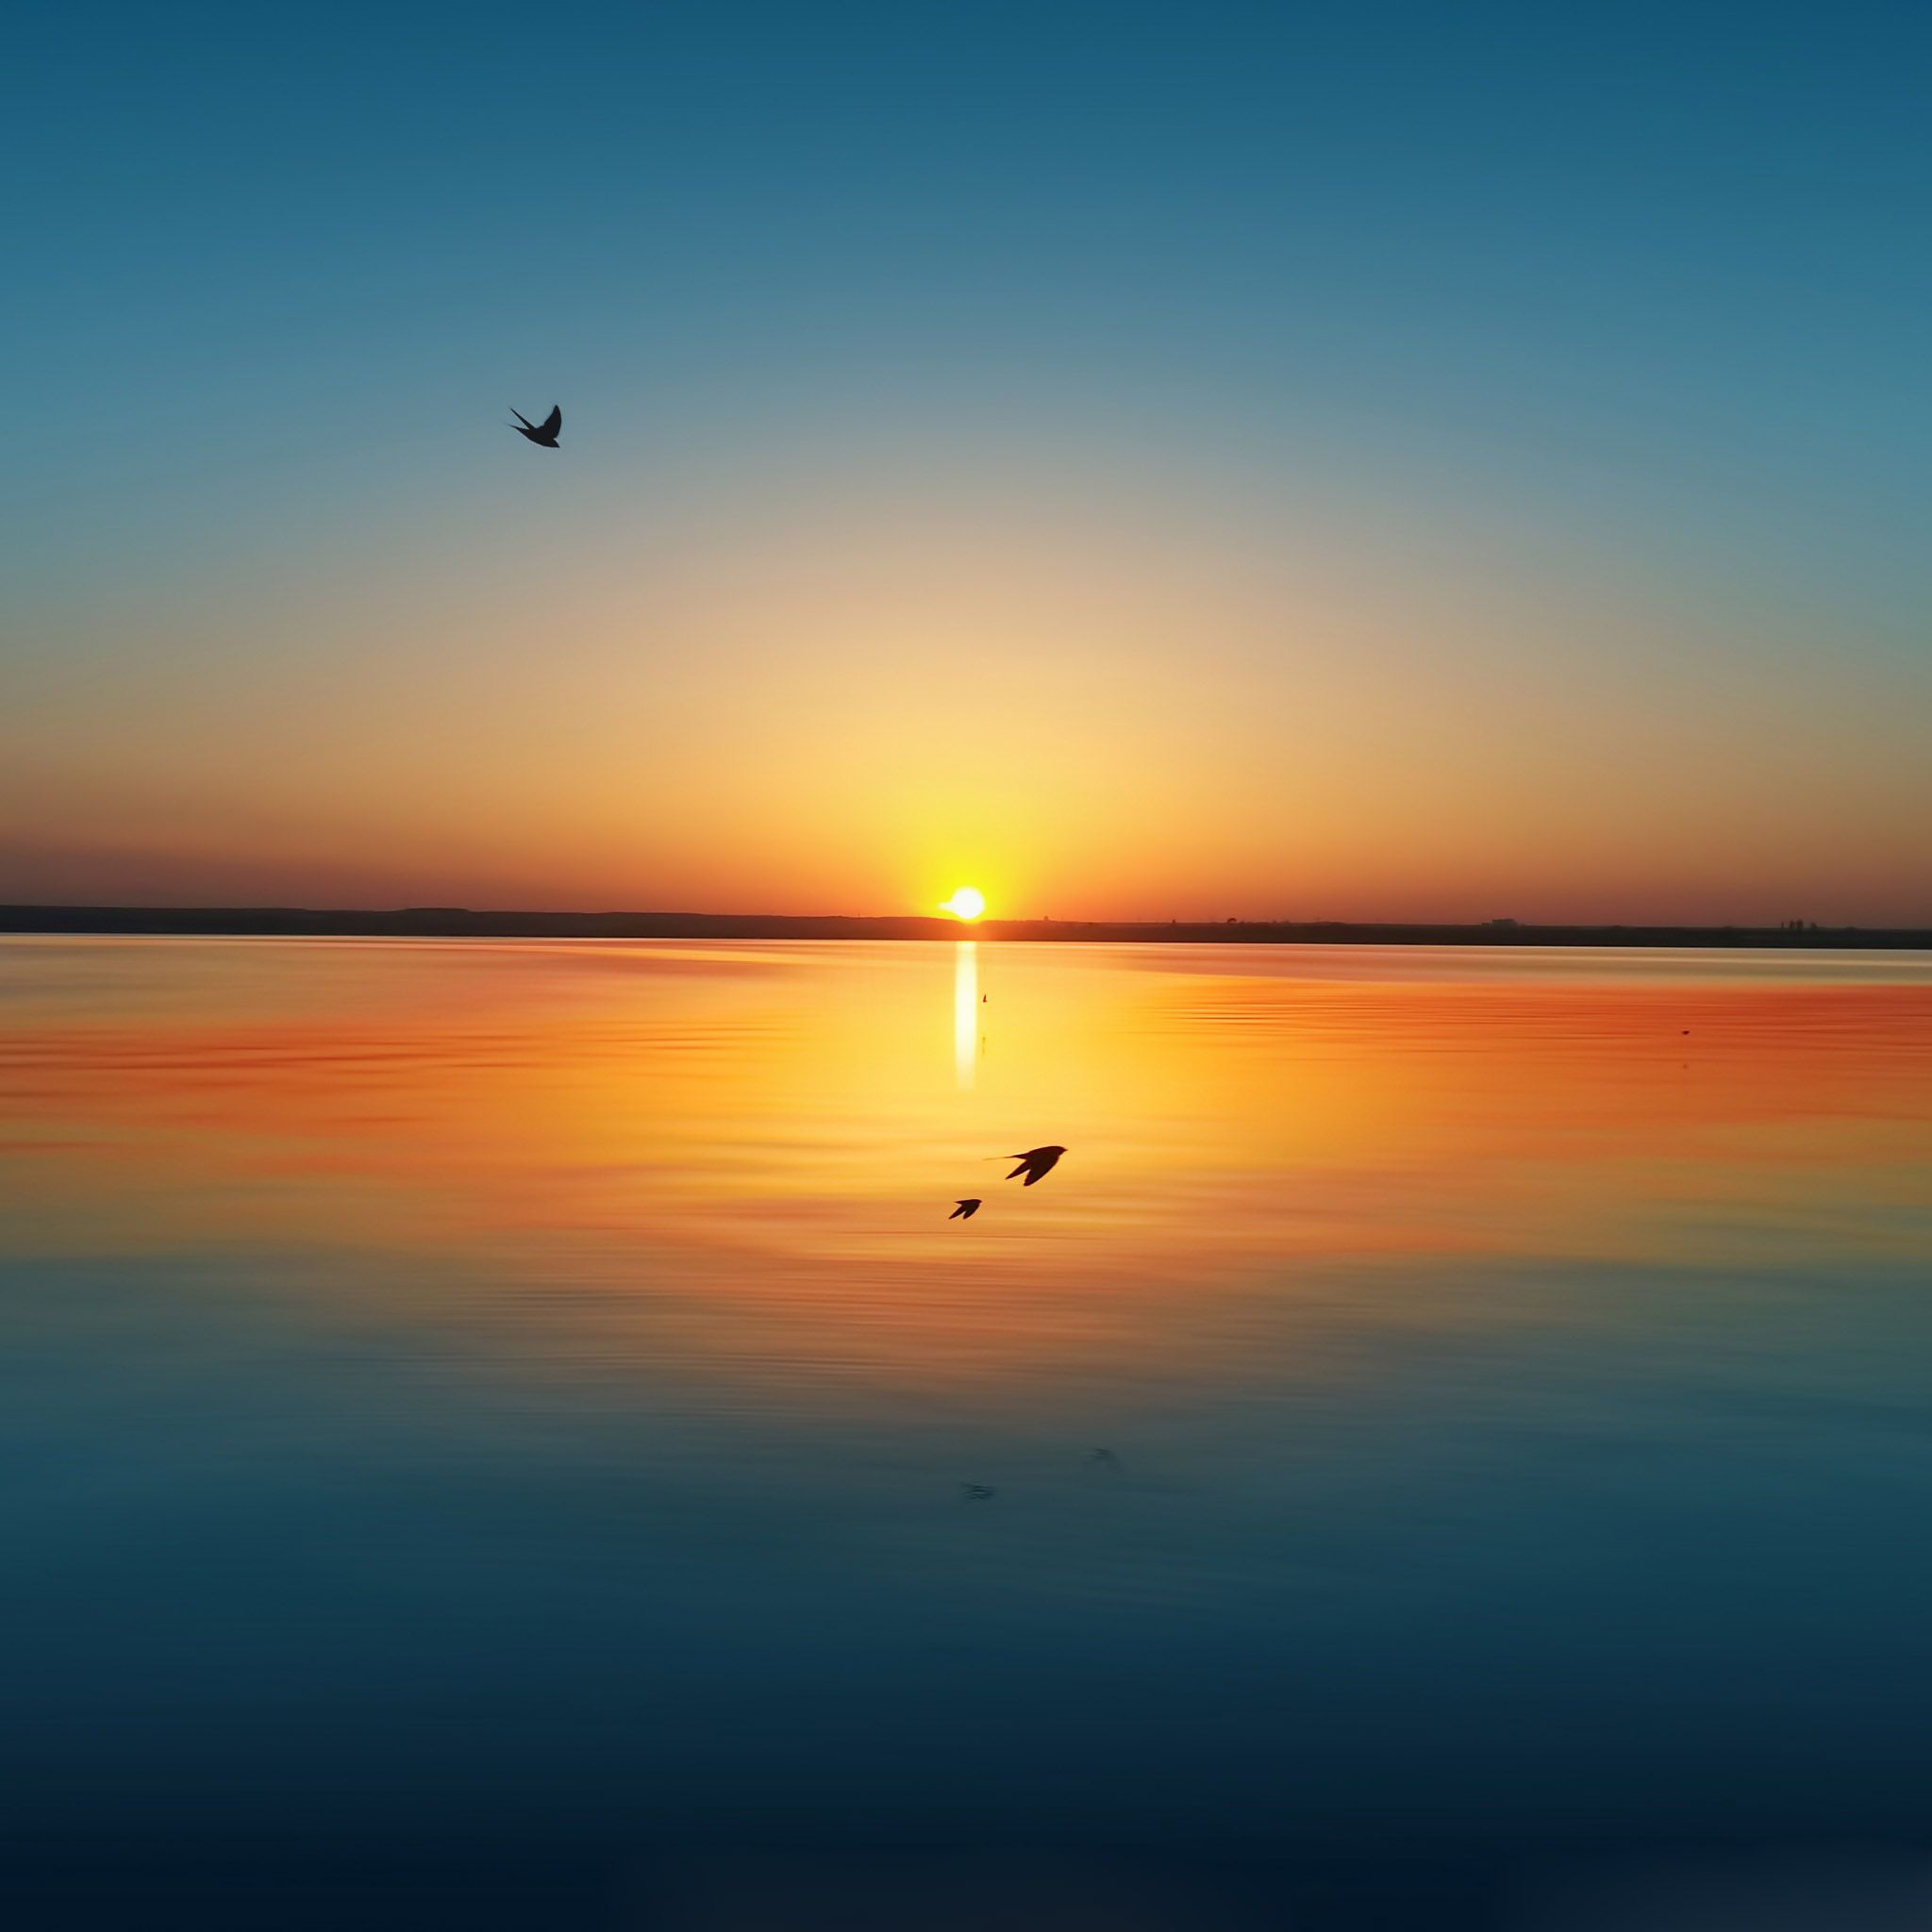 Sunset over lake iPad Air Wallpaper Free Download